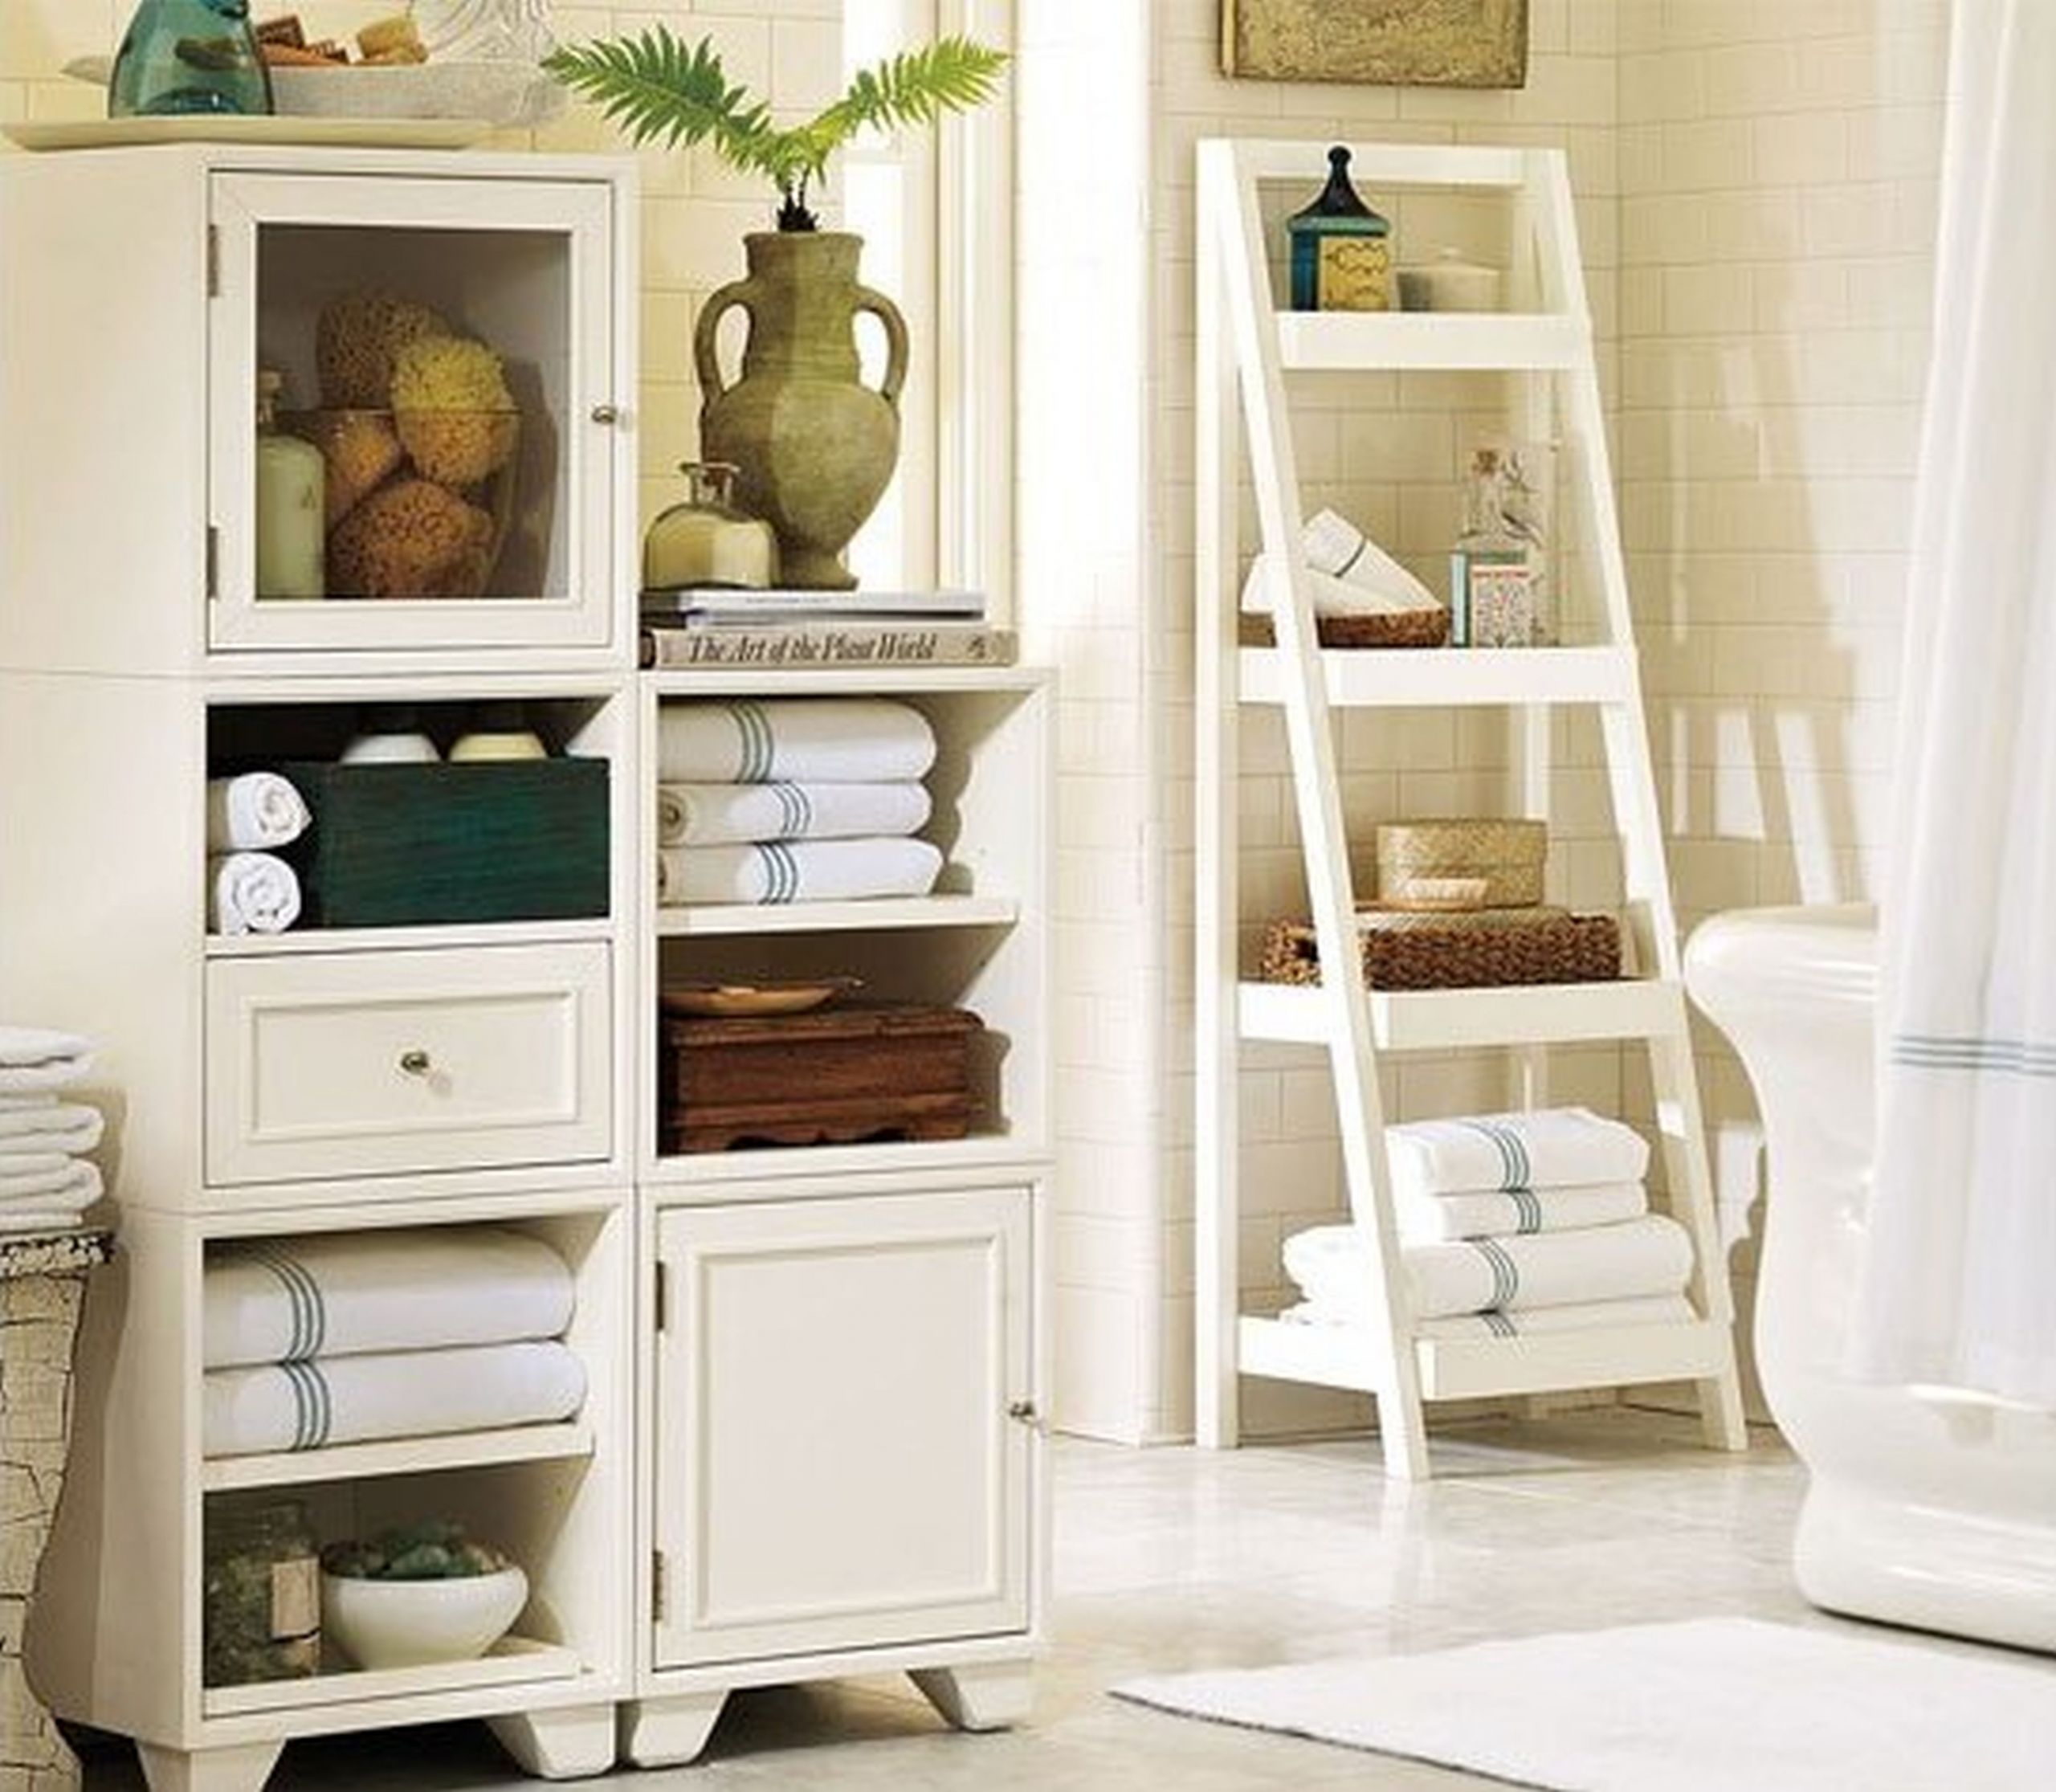 Decorative Bathroom Shelves
 Add Glamour With Small Vintage Bathroom Ideas